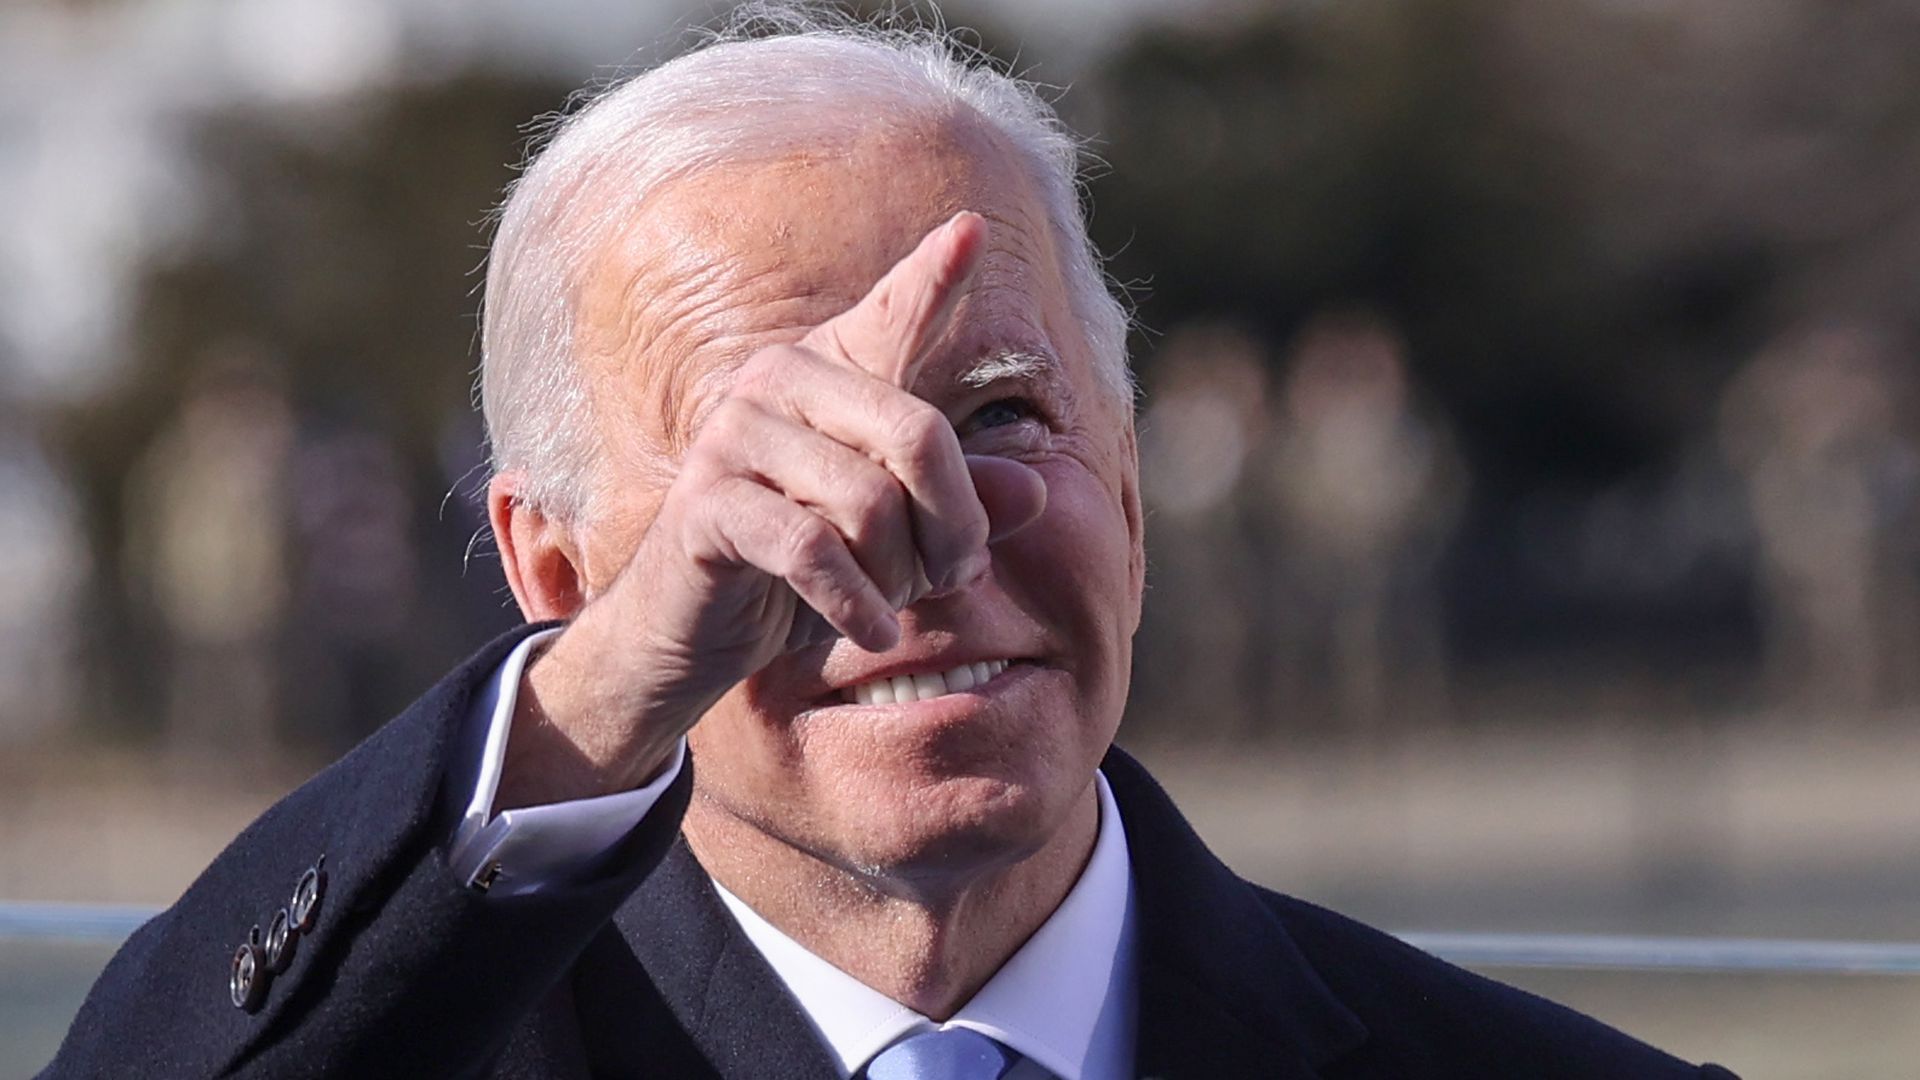 Picture of Joe Biden pointing upwards